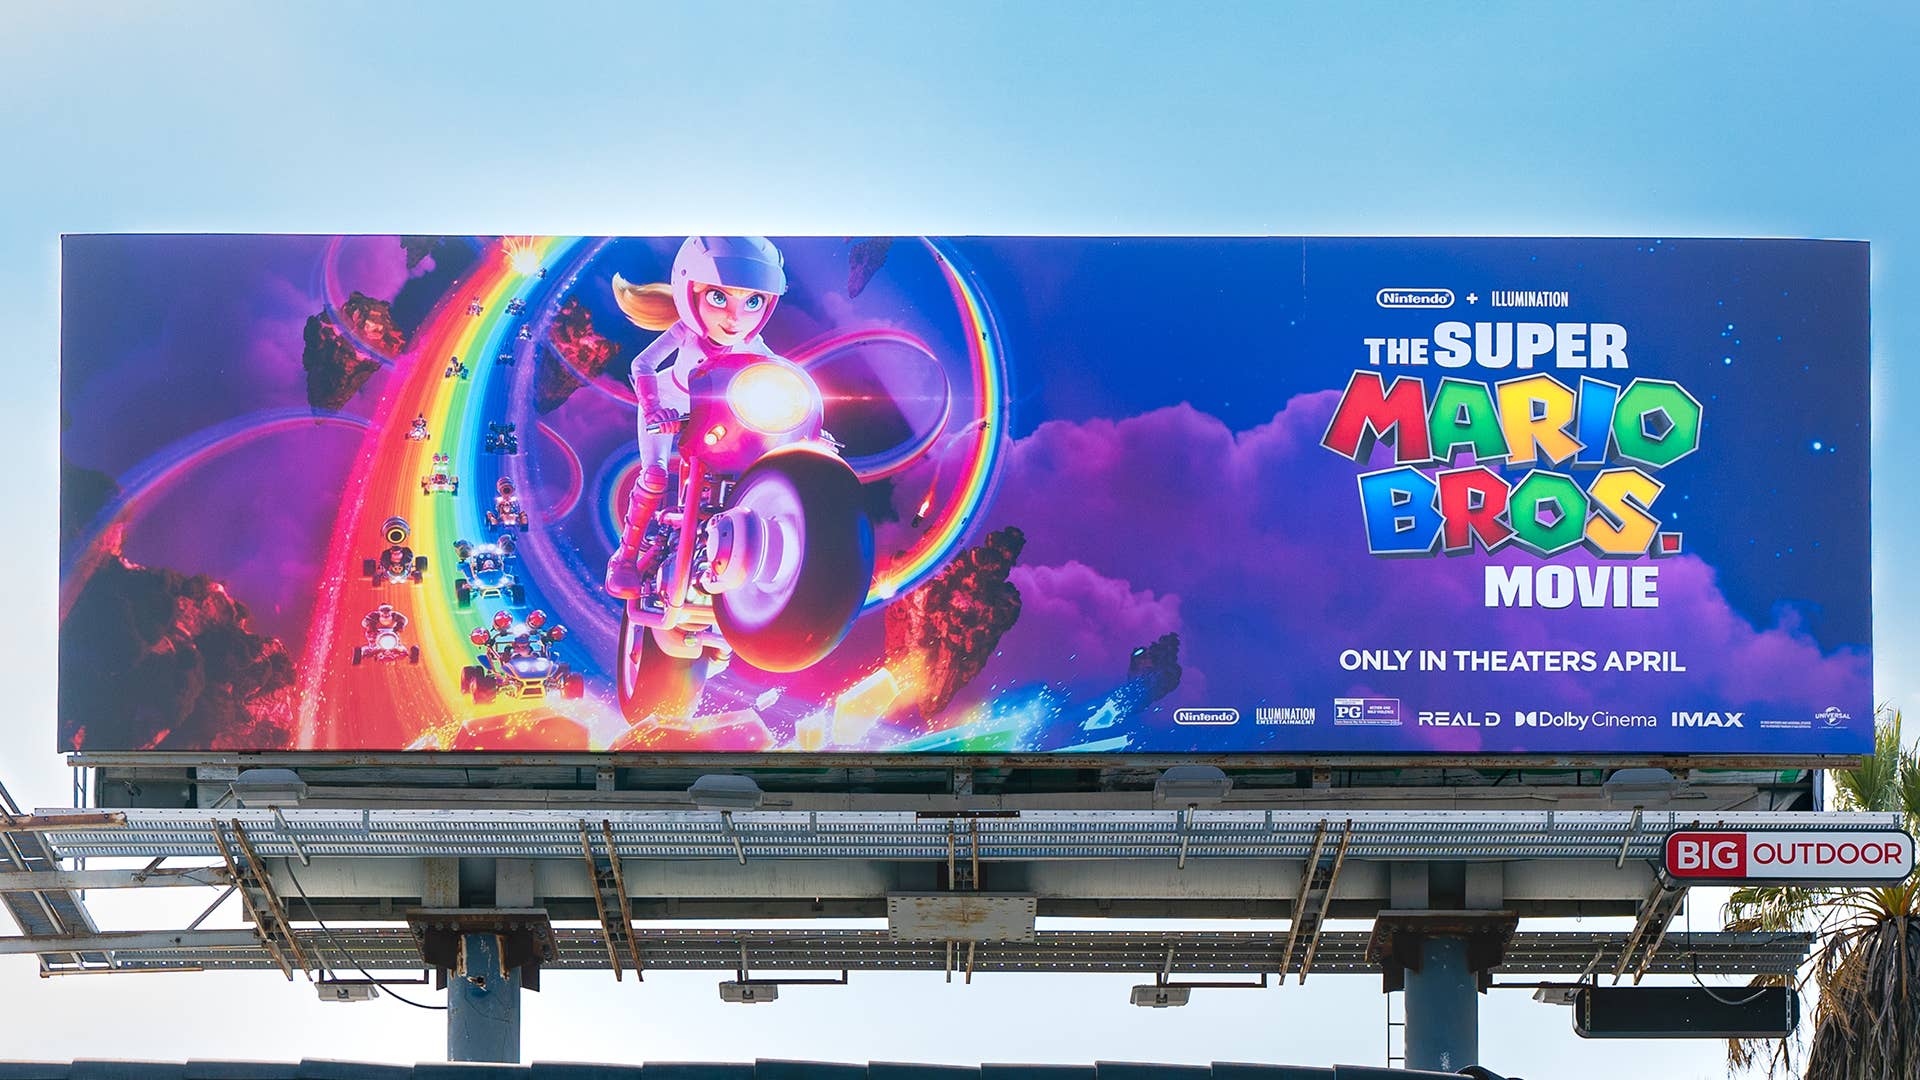 General view of a "Super Mario Bros. Movie" billboard featuring Princess Peach